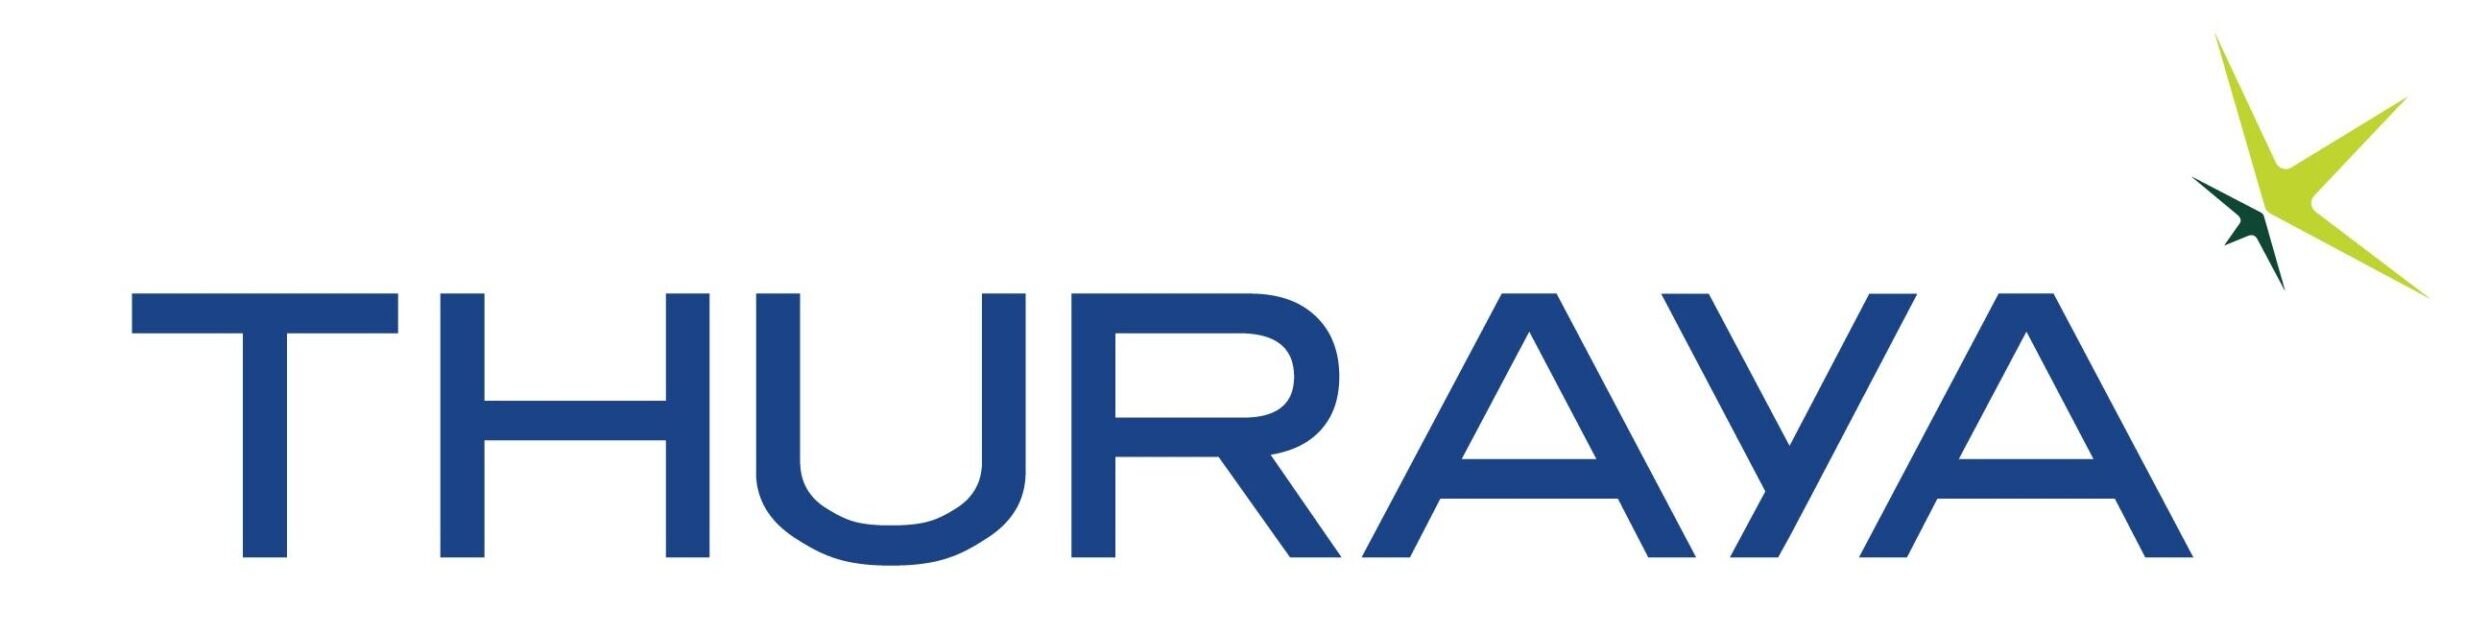 Thuraya Network Logo - Globafone Product